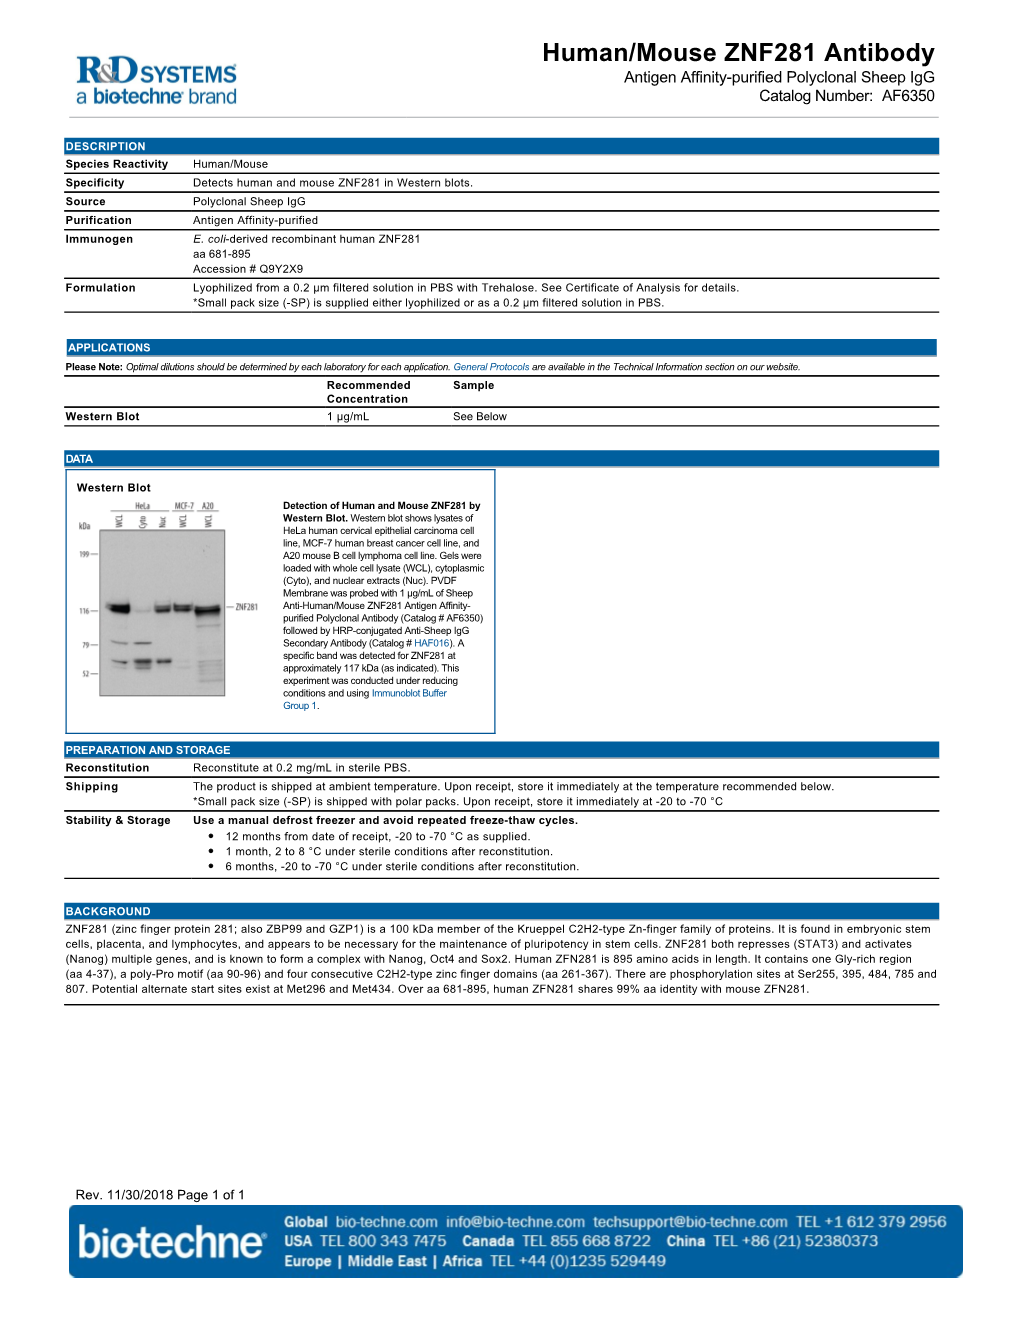 Human/Mouse ZNF281 Antibody Antigen Affinity-Purified Polyclonal Sheep Igg Catalog Number: AF6350